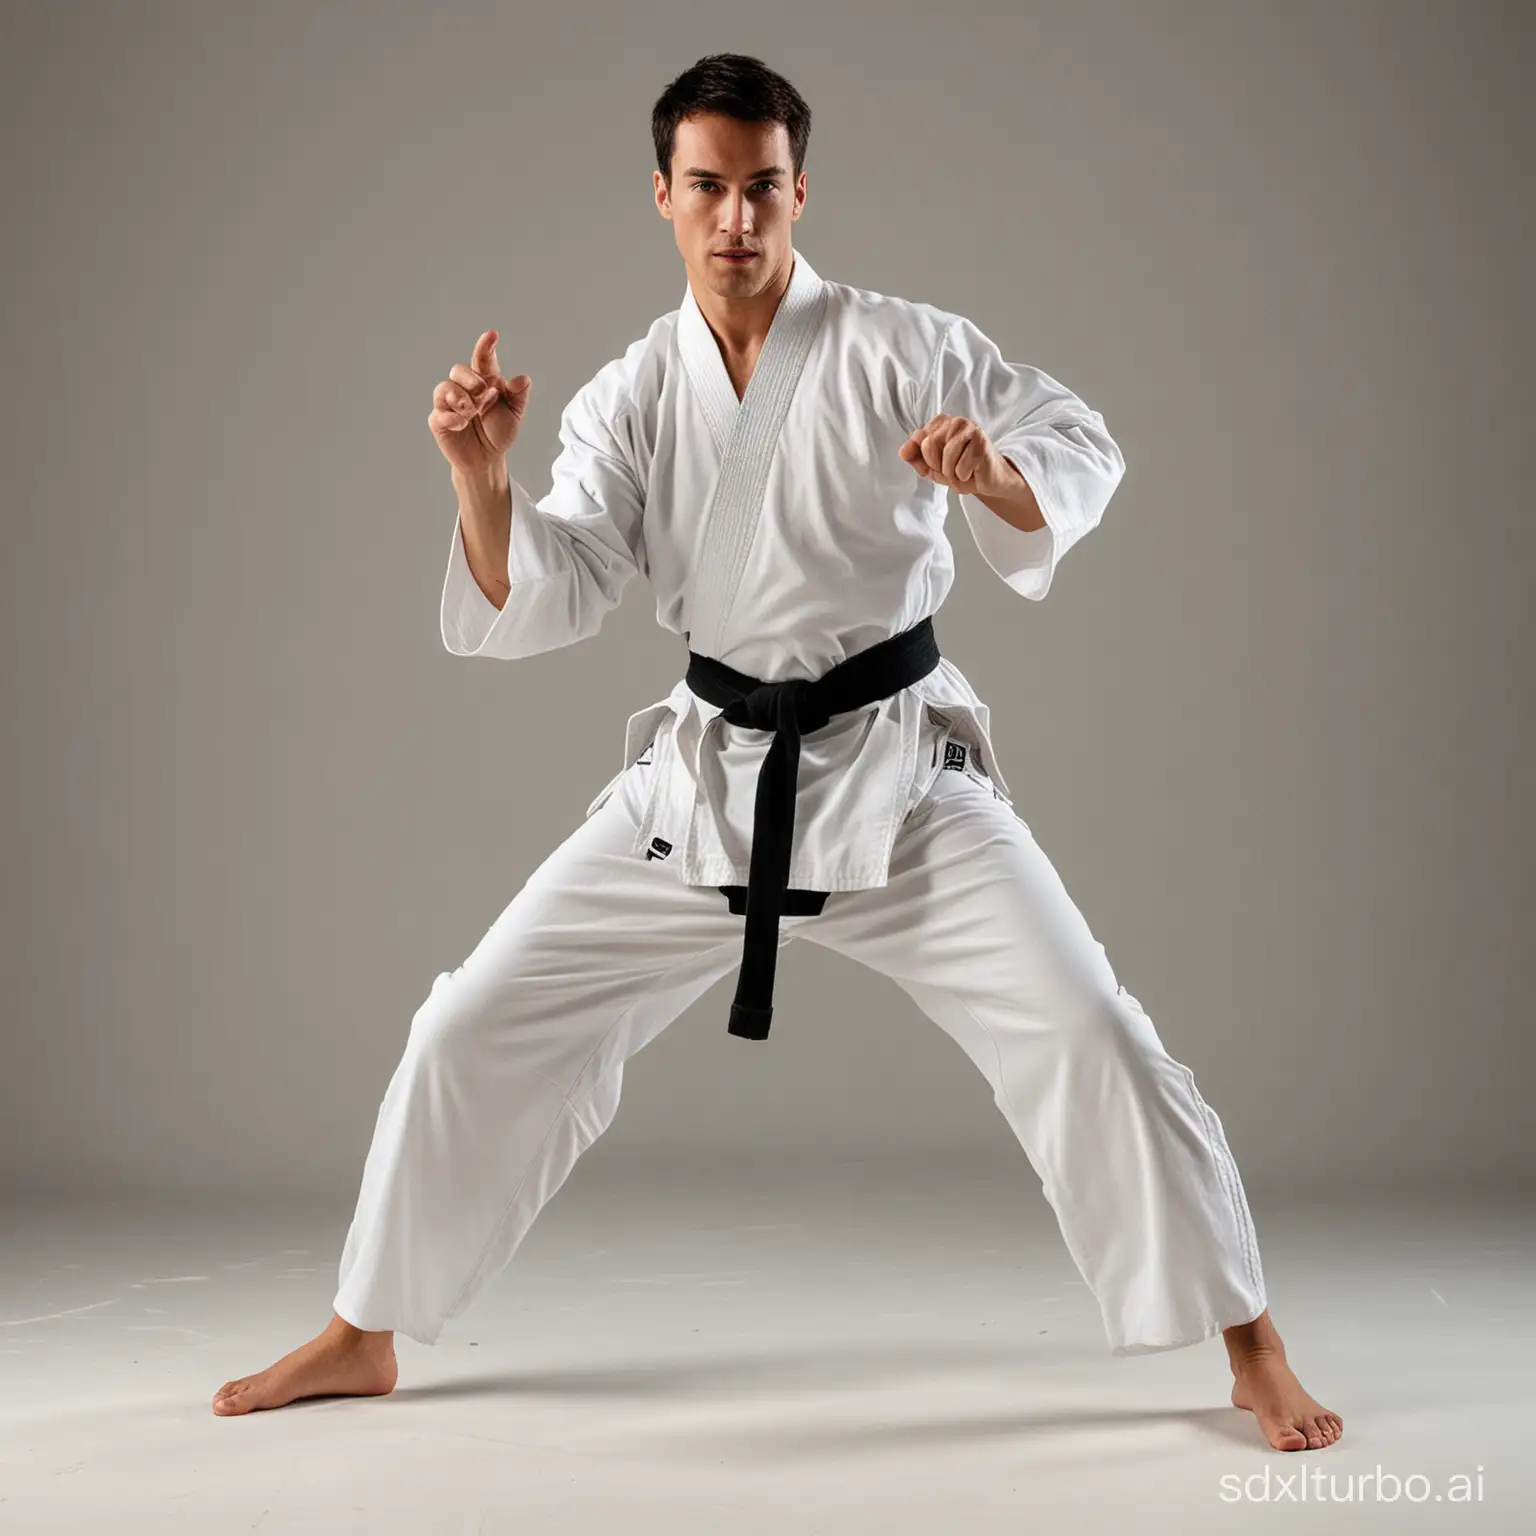 A man training martial arts